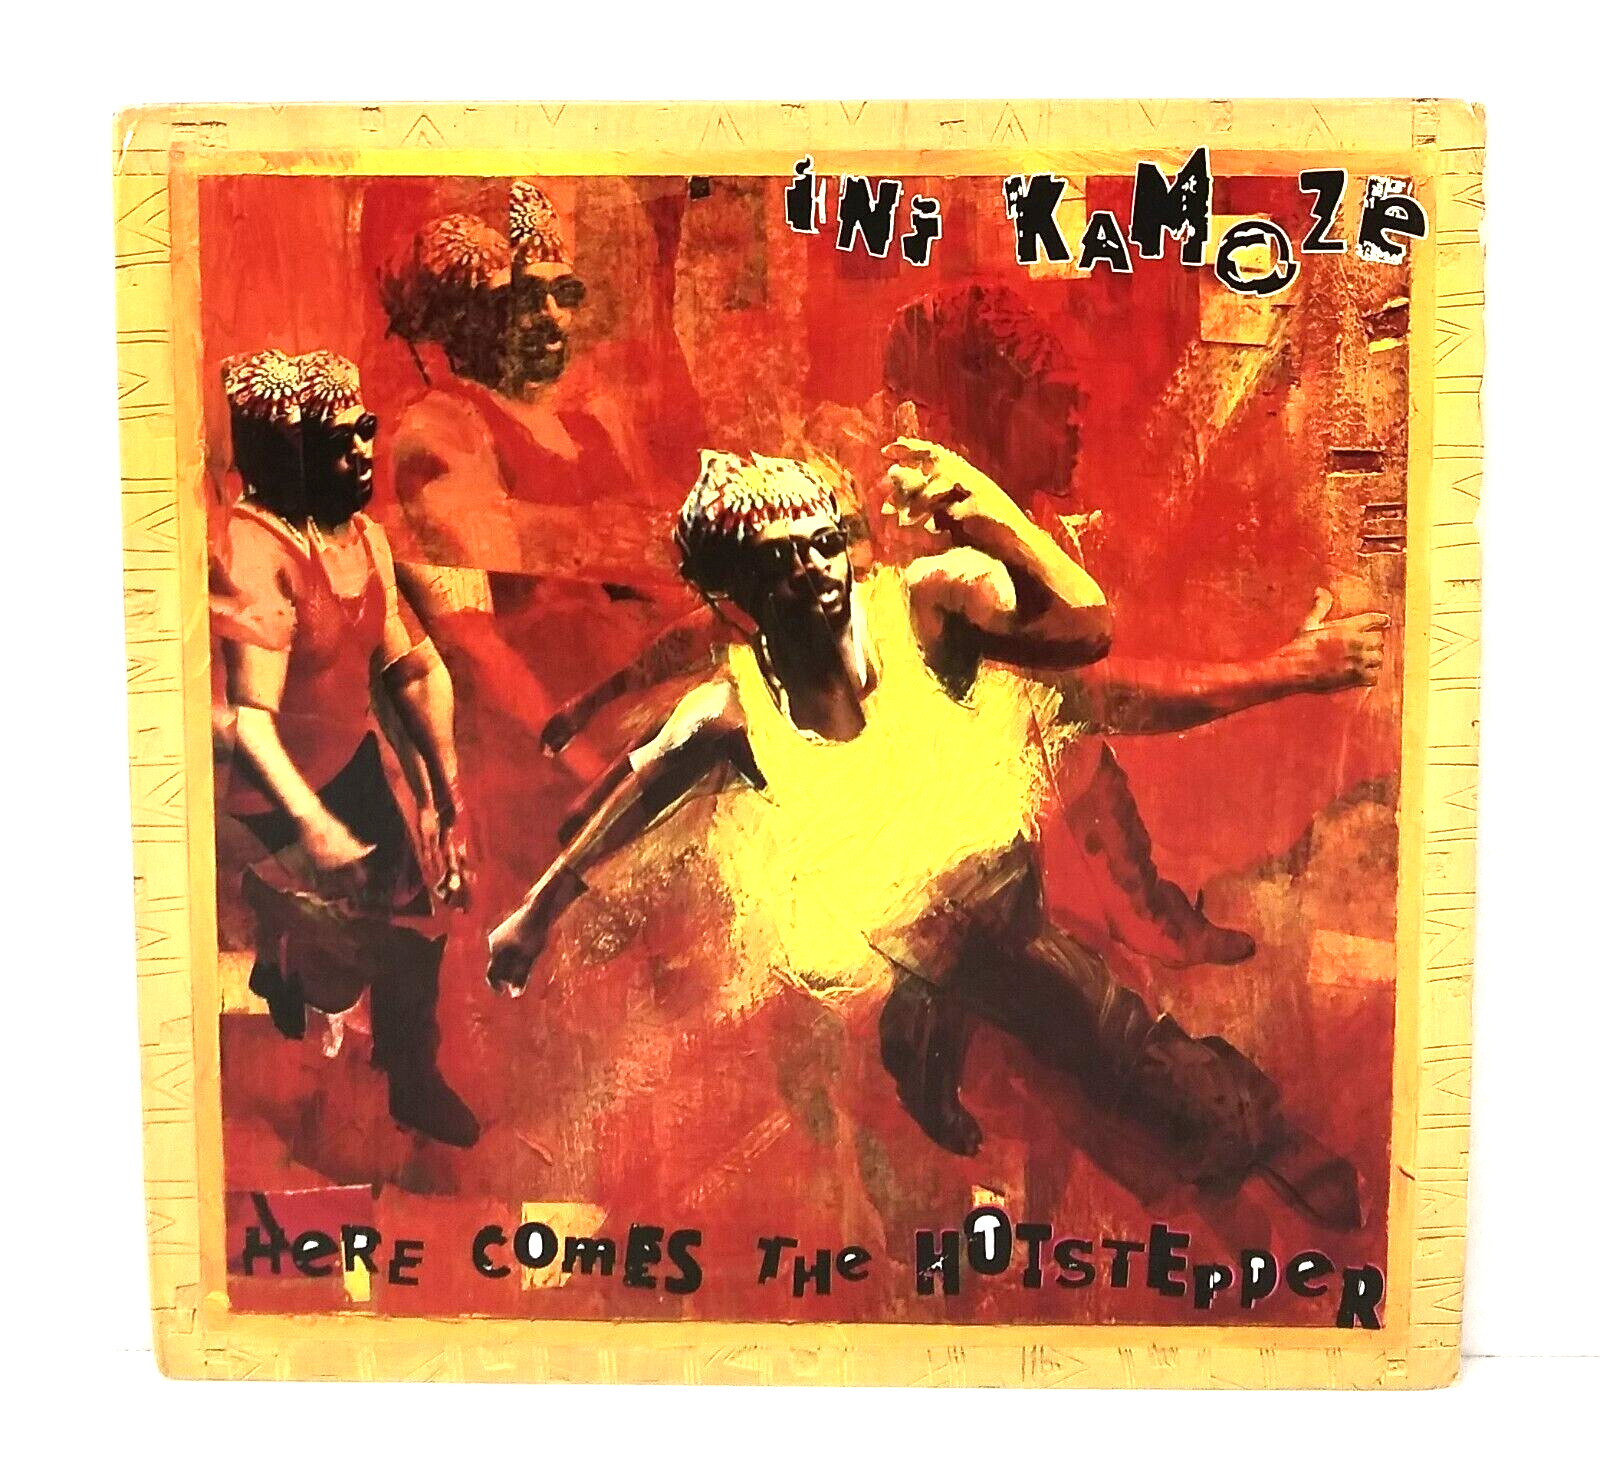 Ini Kamoze "Here Comes The Hotstepper" 12” Vinyl Maxi Single 1994 Rare Reggae VG